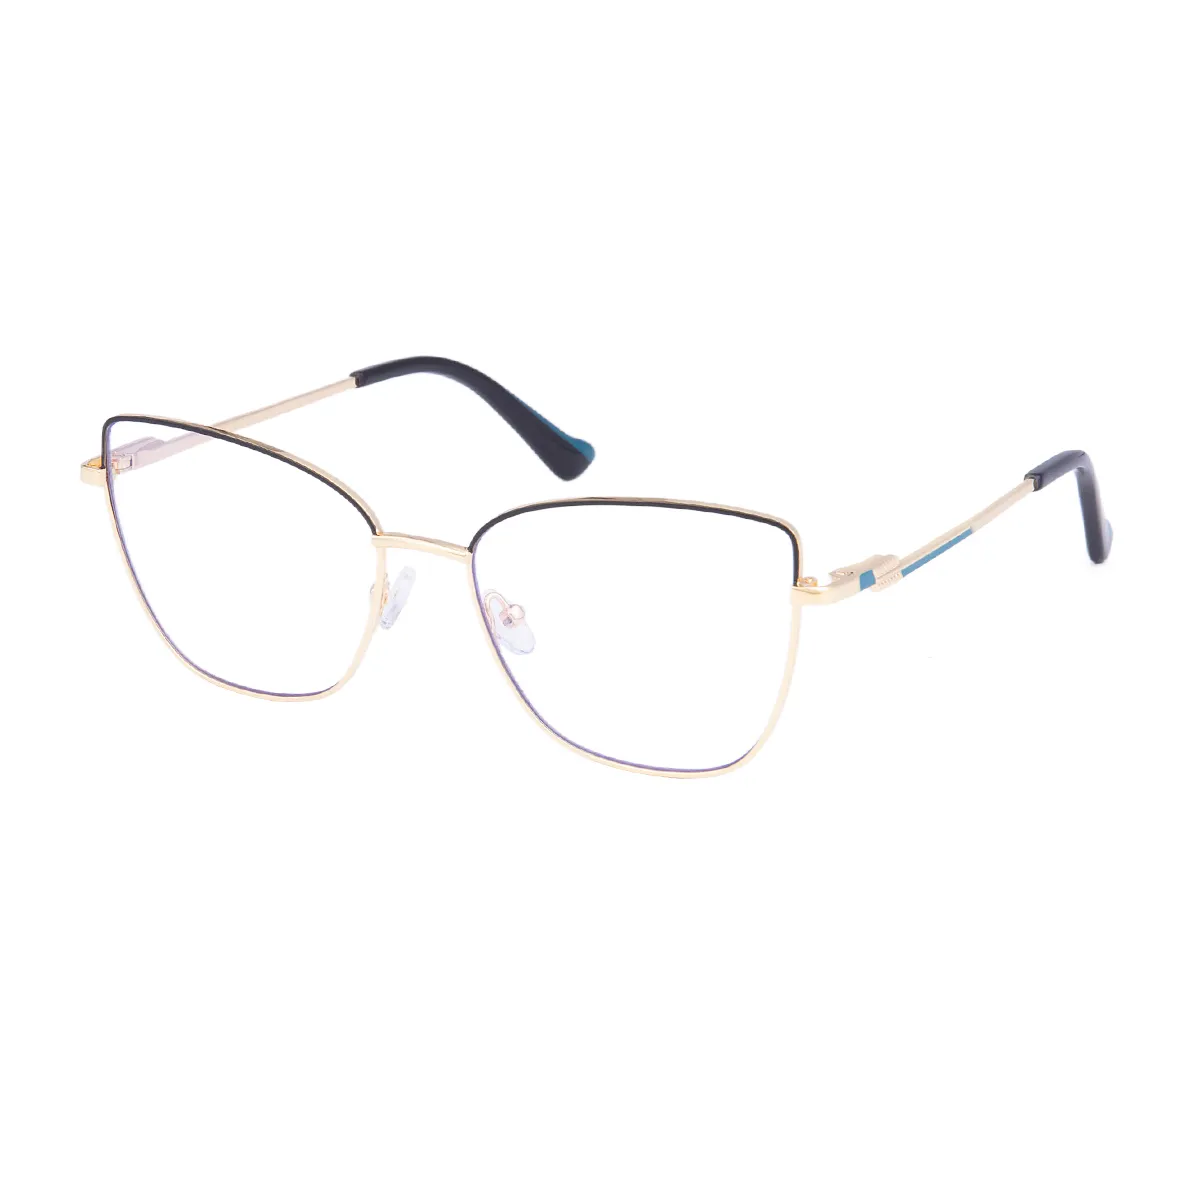 Fashion Oval Gold/Black Eyeglasses for Women